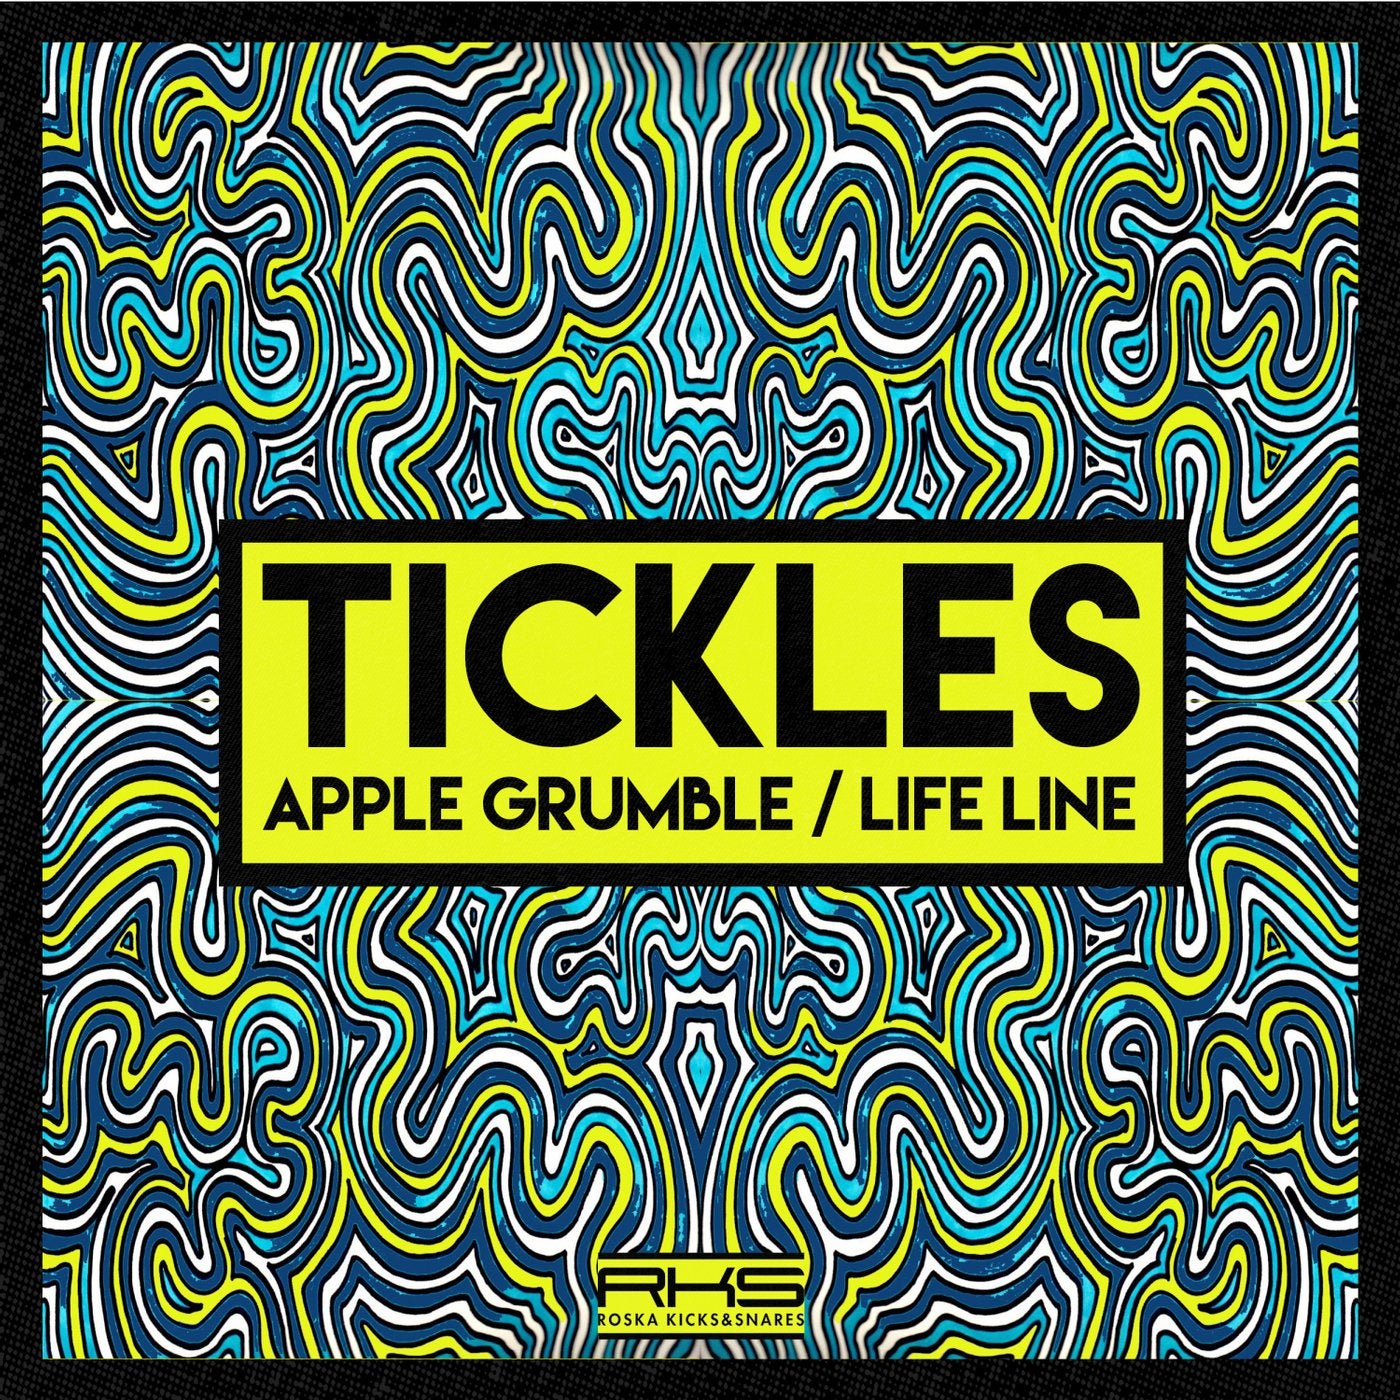 Apple Grumble / Life Line